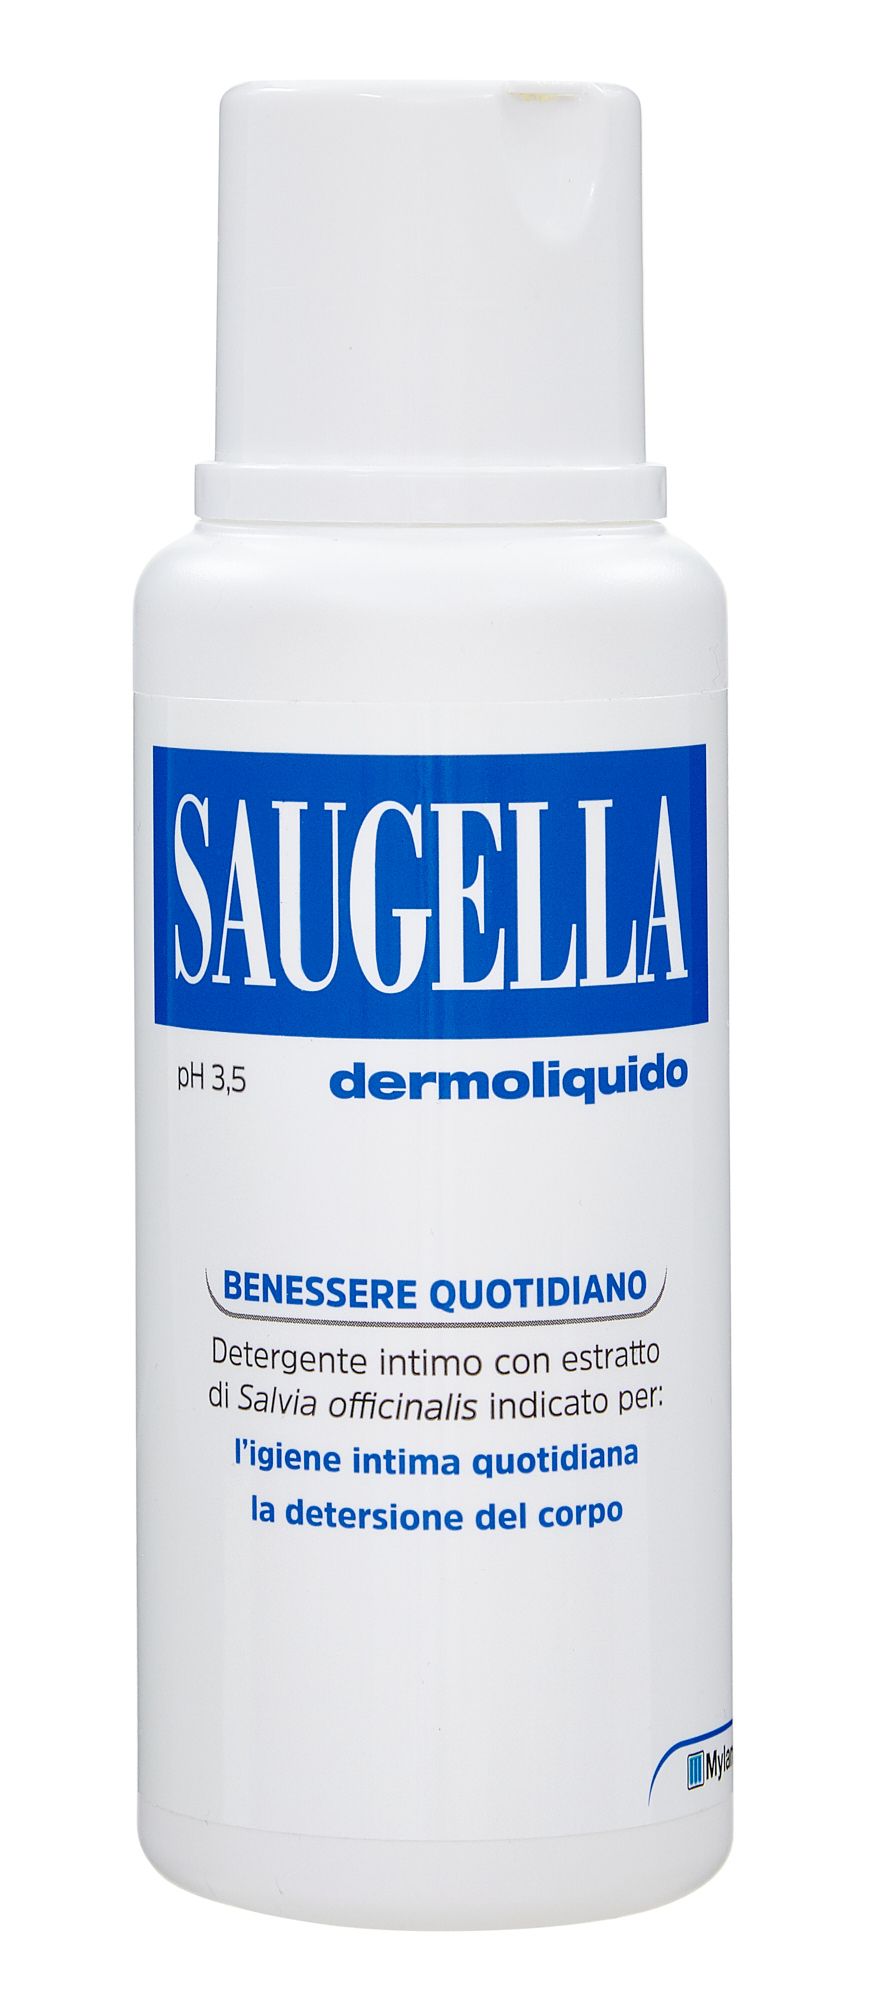 Saugella Dermoliquido Detergente Intimo A Base Di Salvia Officinalis 250ml